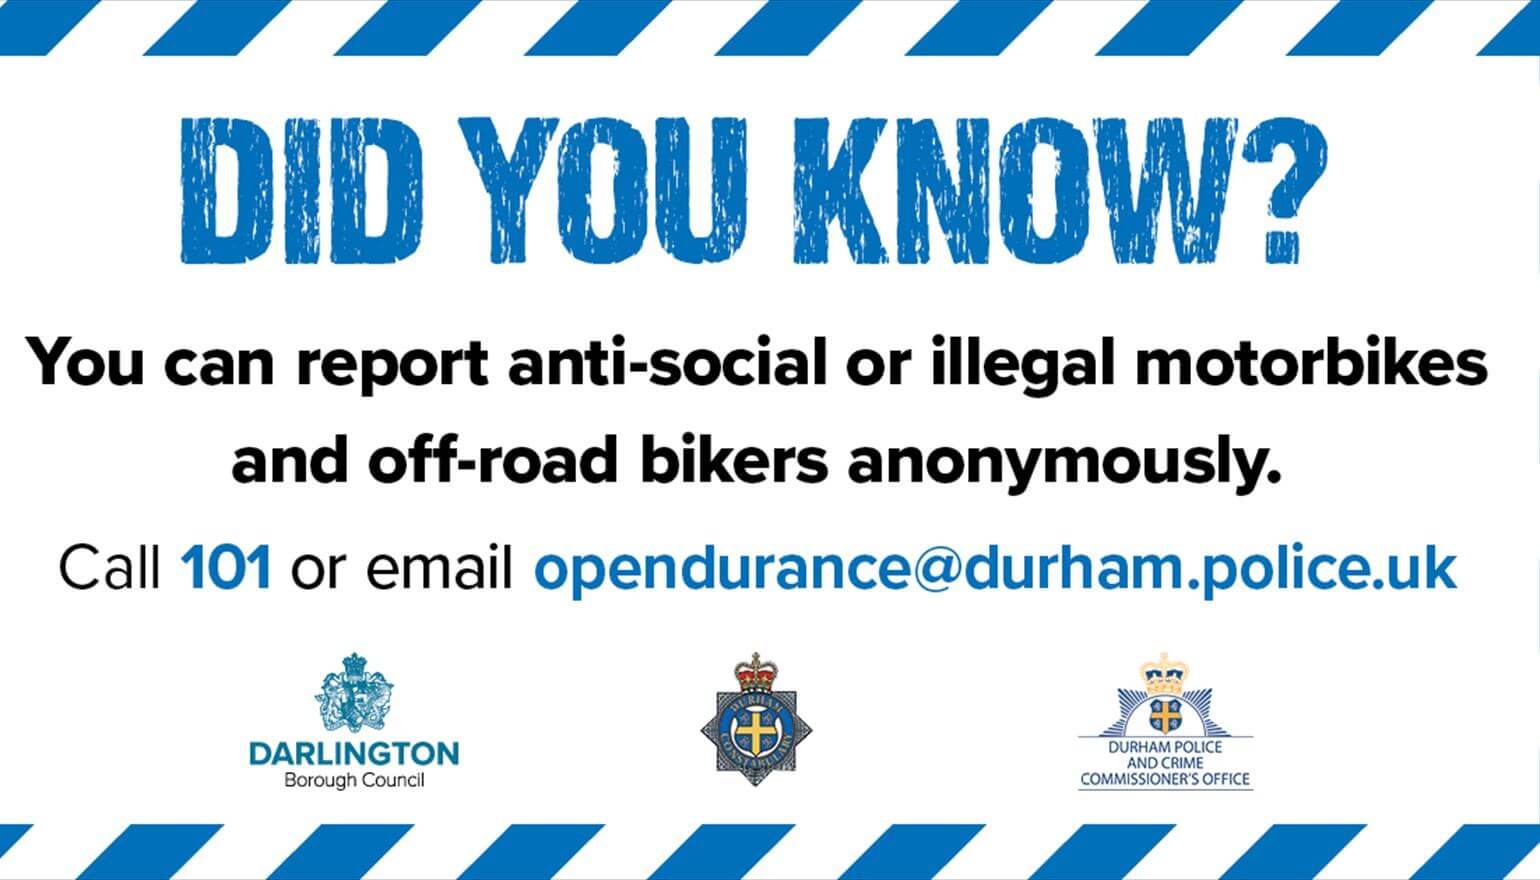 Off-road bikes targeted in crackdown on anti-social behaviour